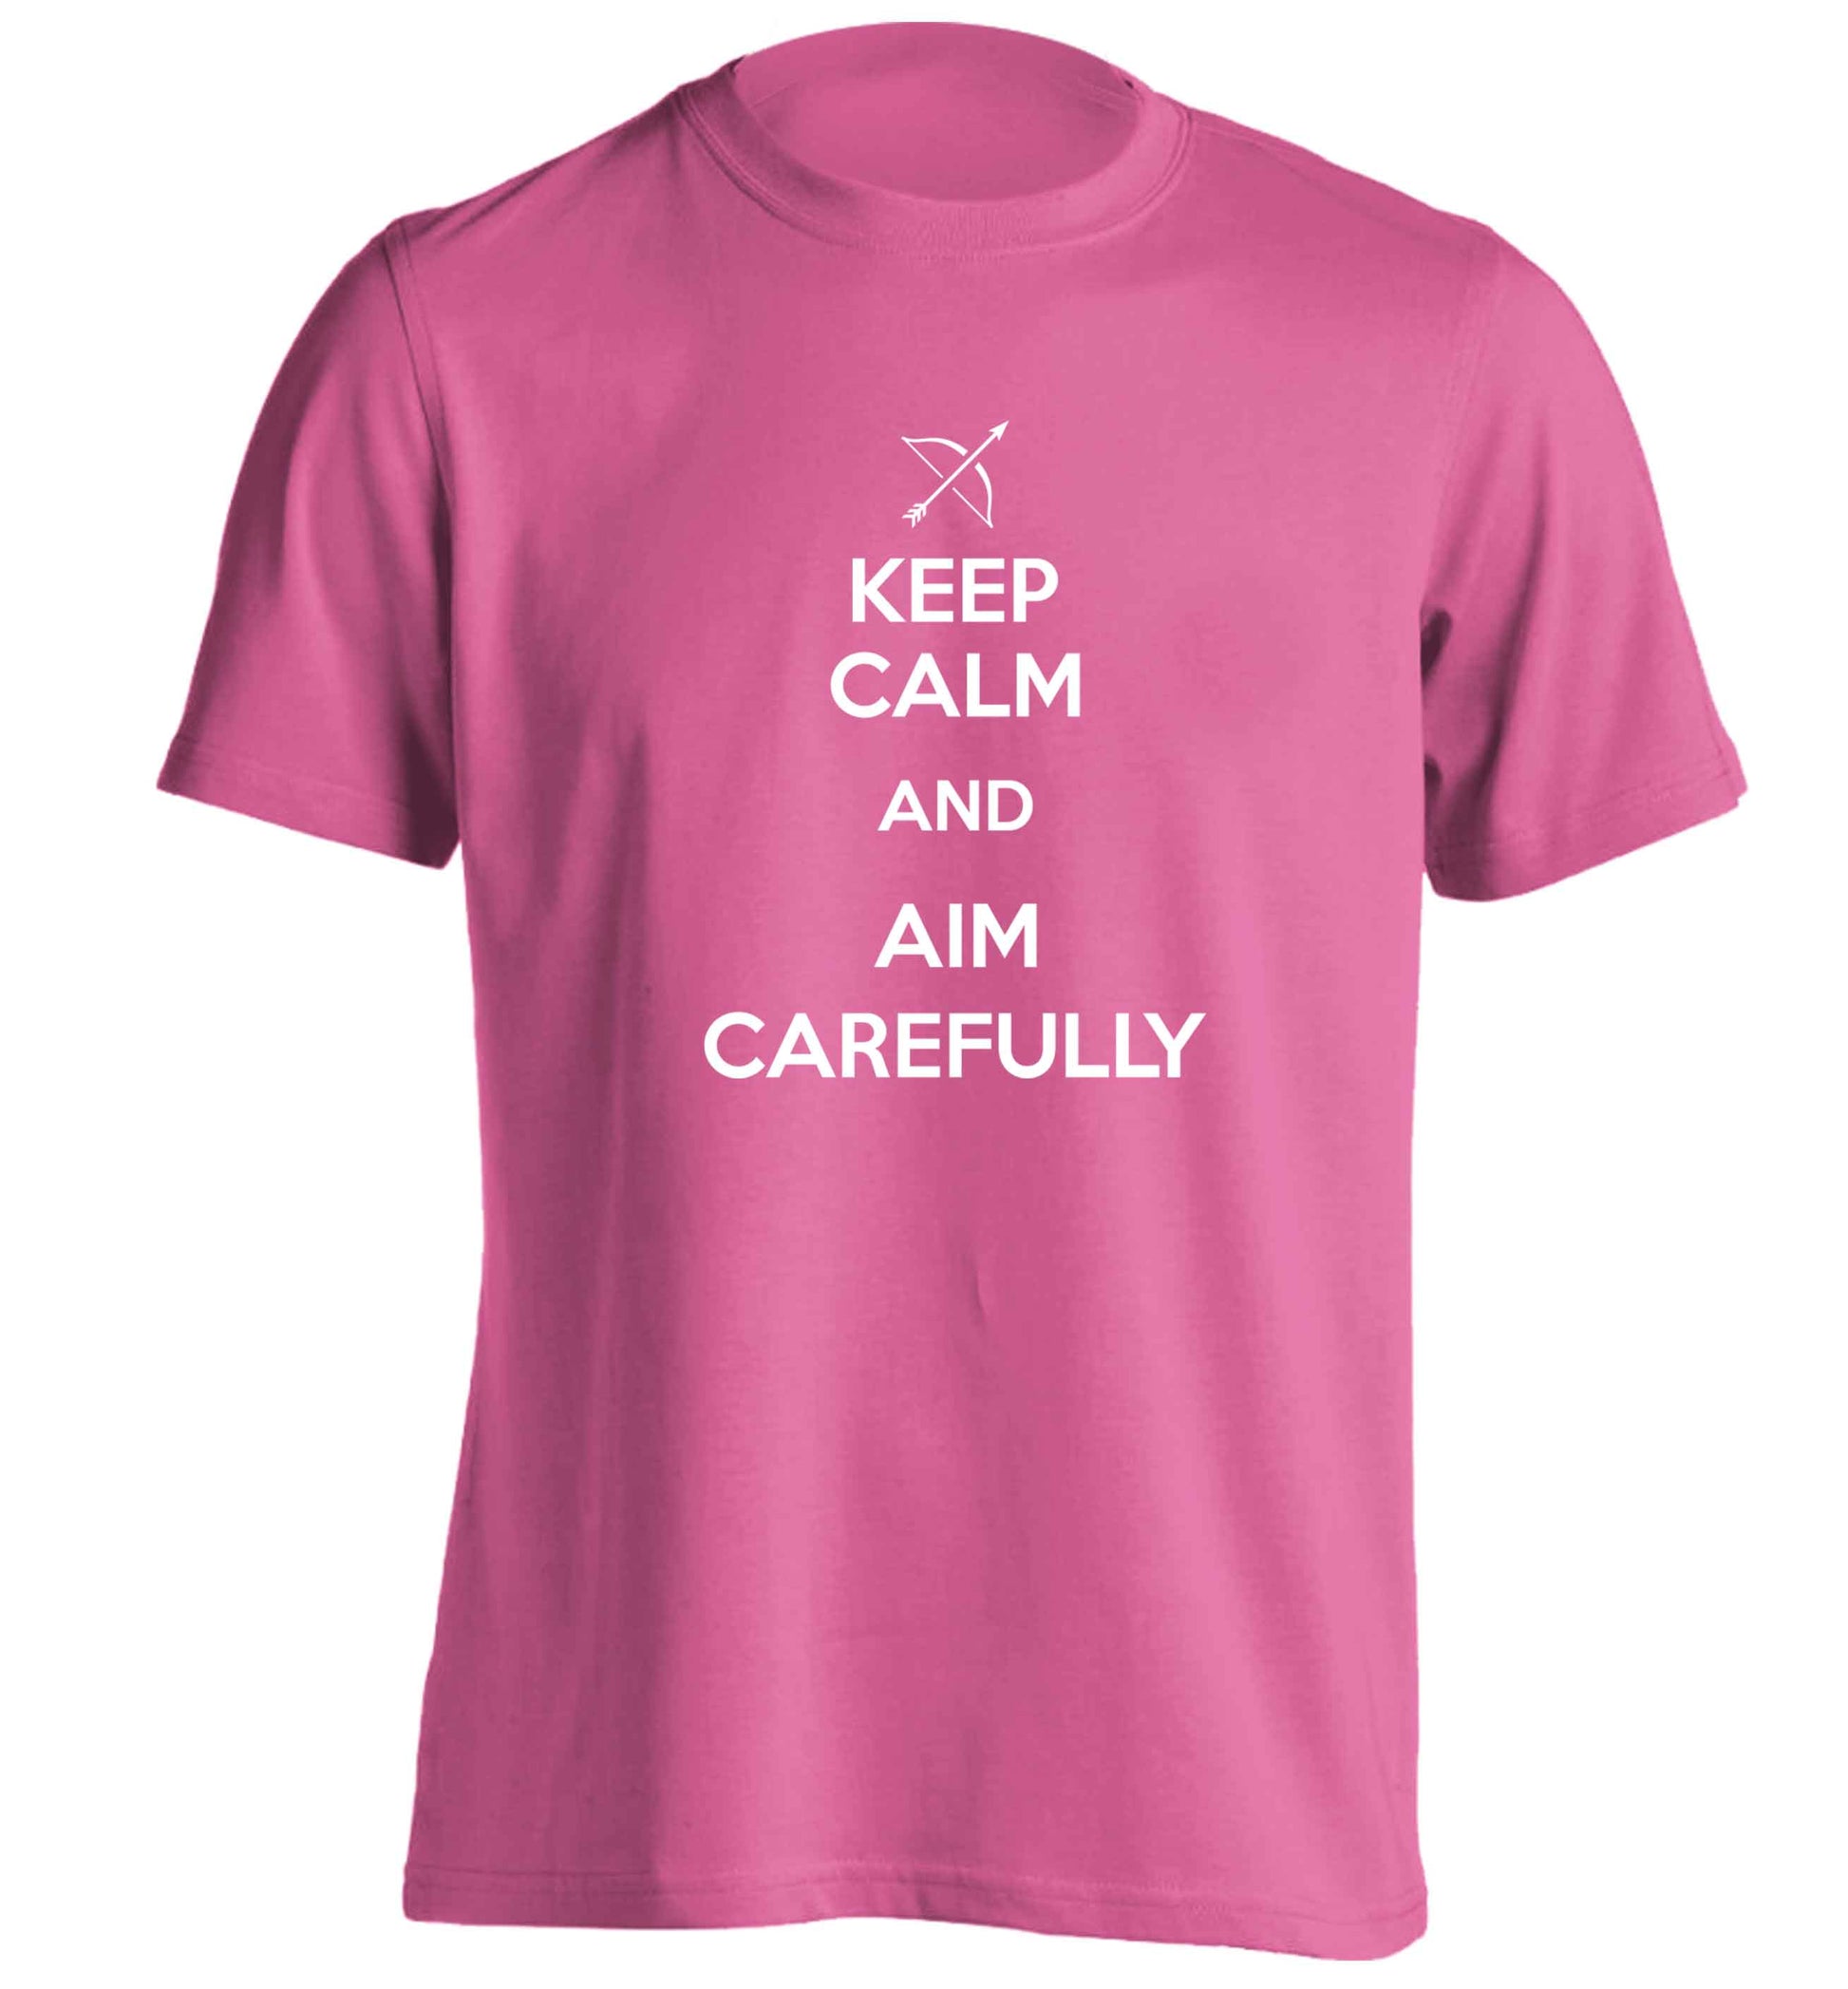 Keep calm and aim carefully adults unisex pink Tshirt 2XL